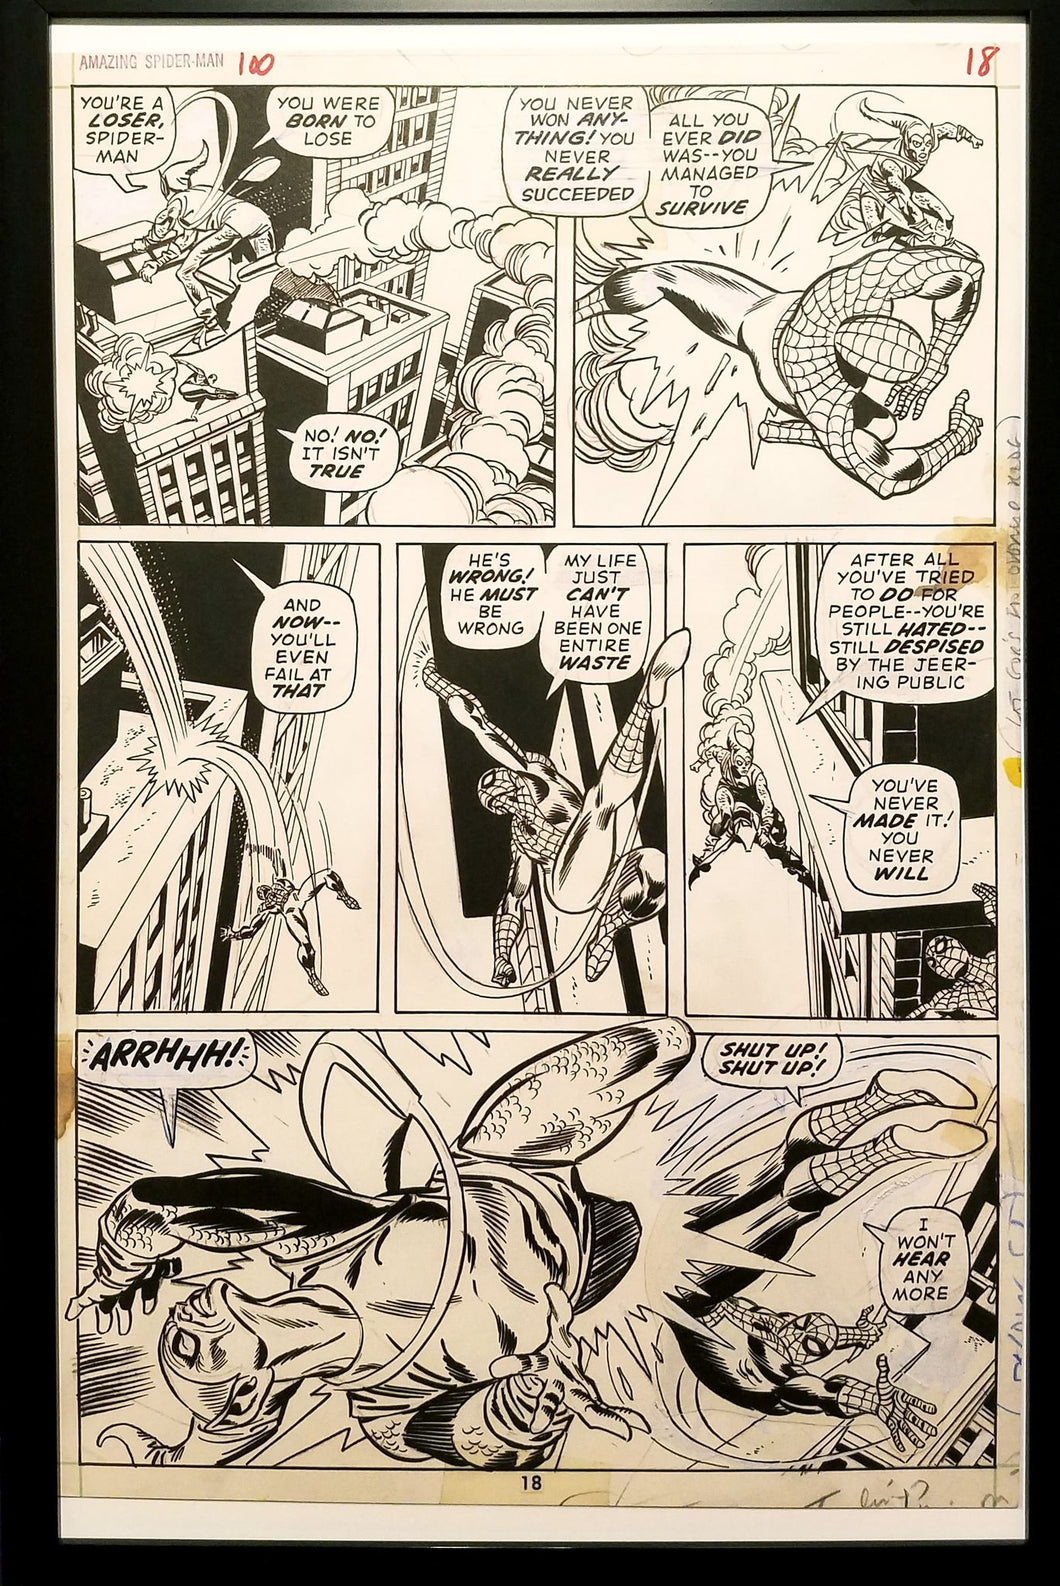 Amazing Spider-Man #100 pg. 18 Gil Kane 11x17 FRAMED Original Art Poster Marvel Comics